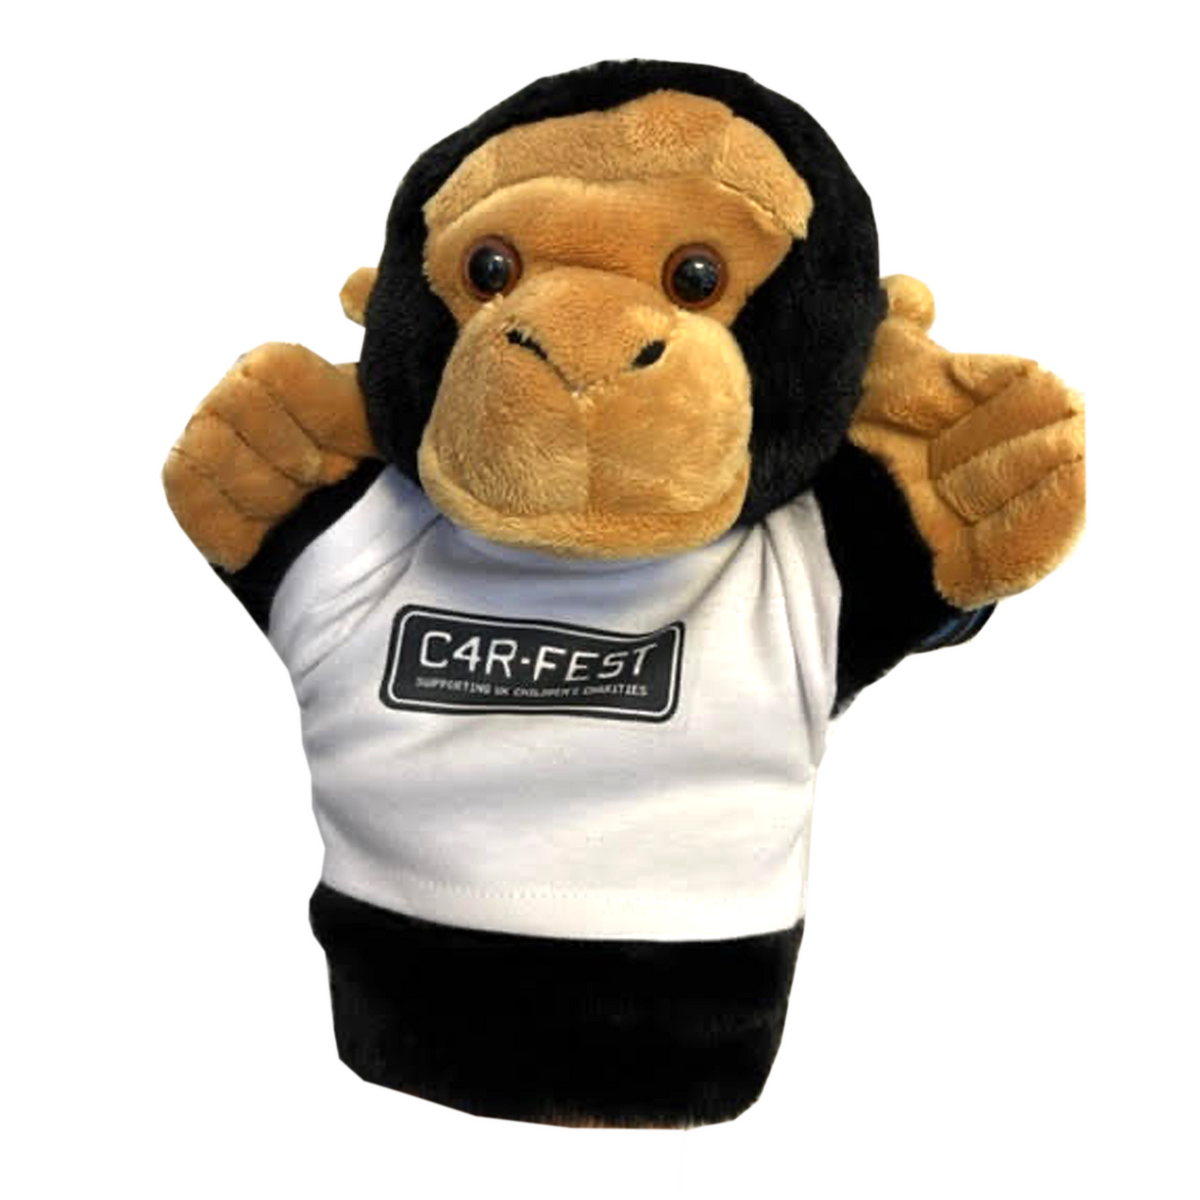 Carfest Monkey Puppet